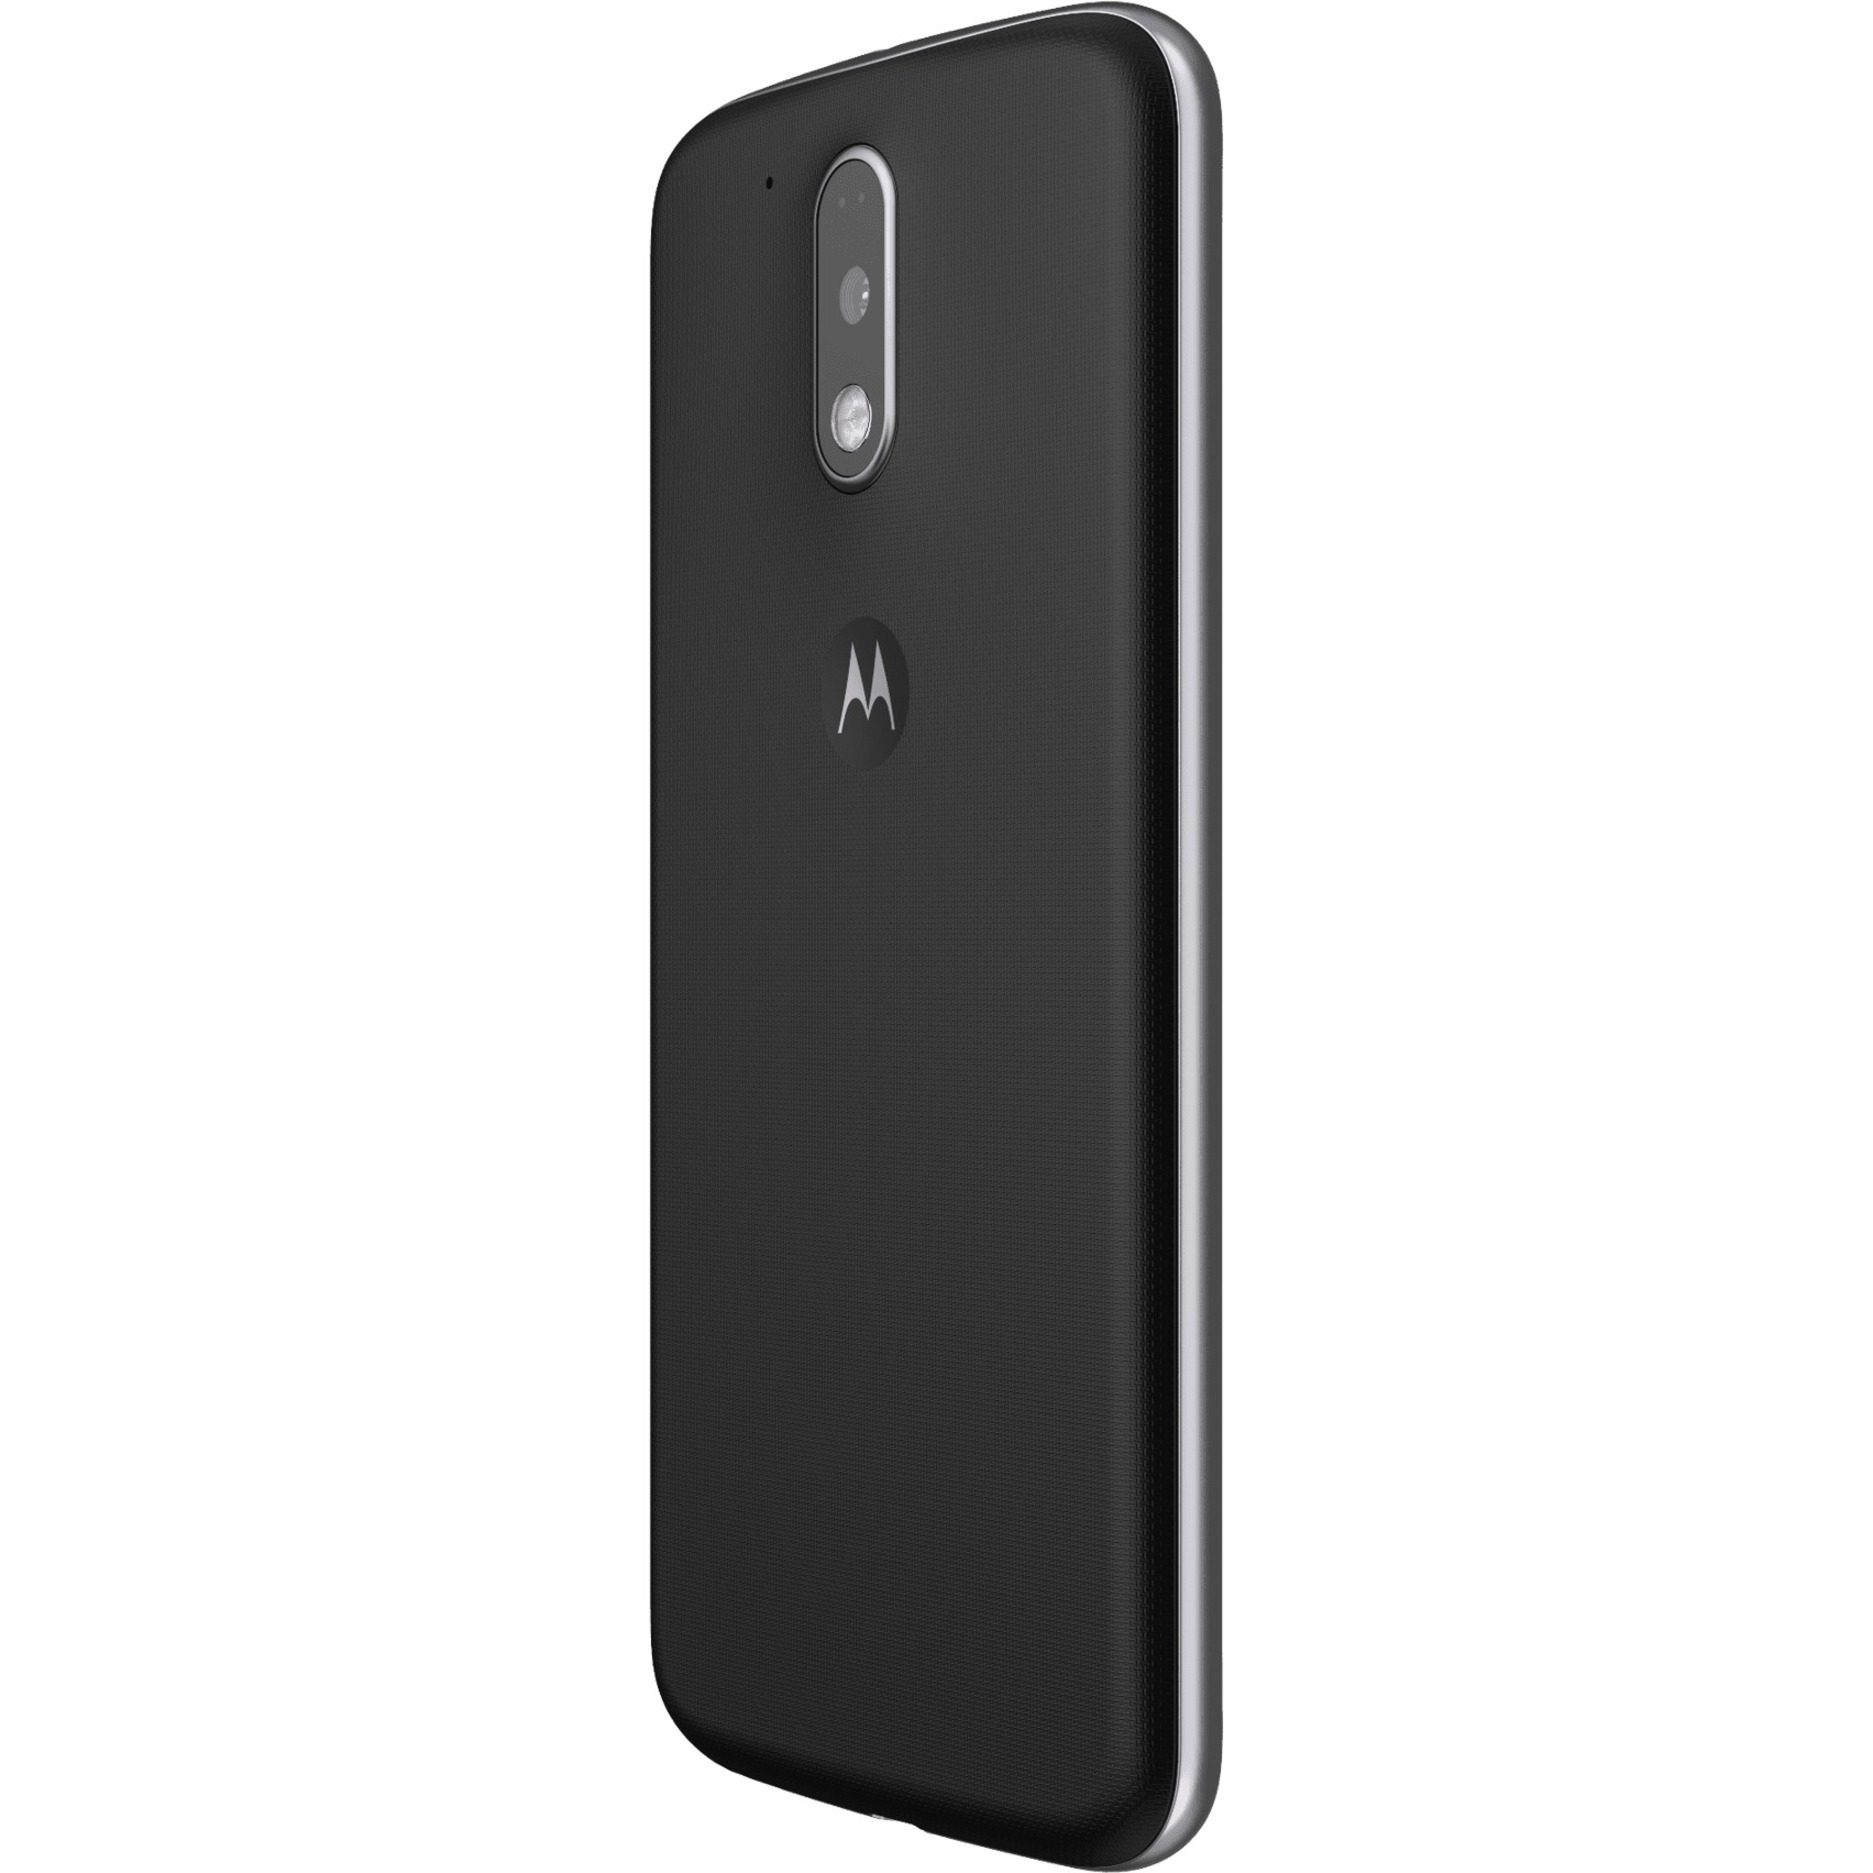 Motorola Moto G4 Plus 16GB Smartphone (Unlocked), Black - image 4 of 15